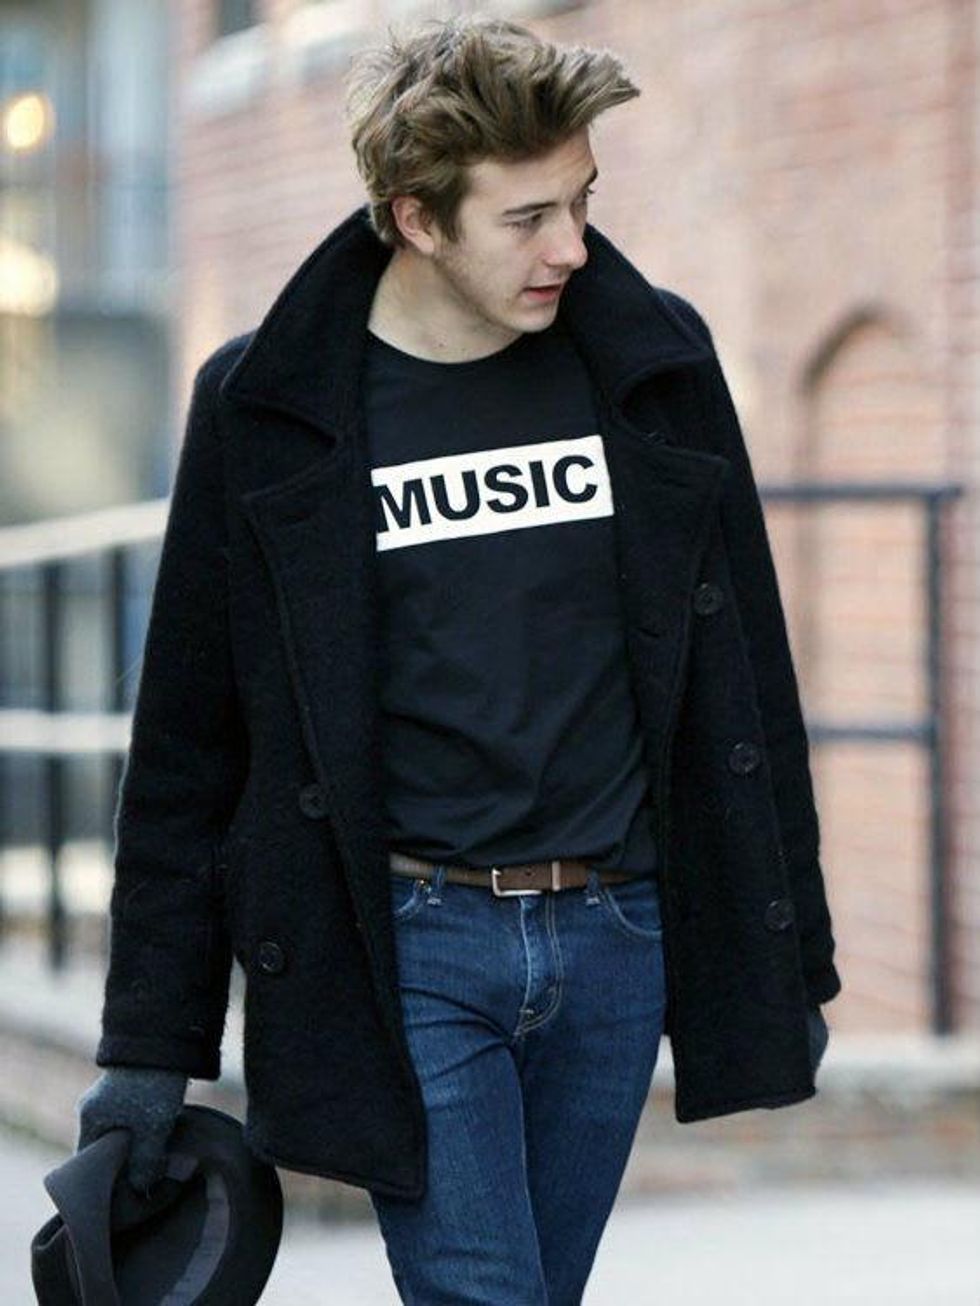 Music T-shirt at fM Fashion Music